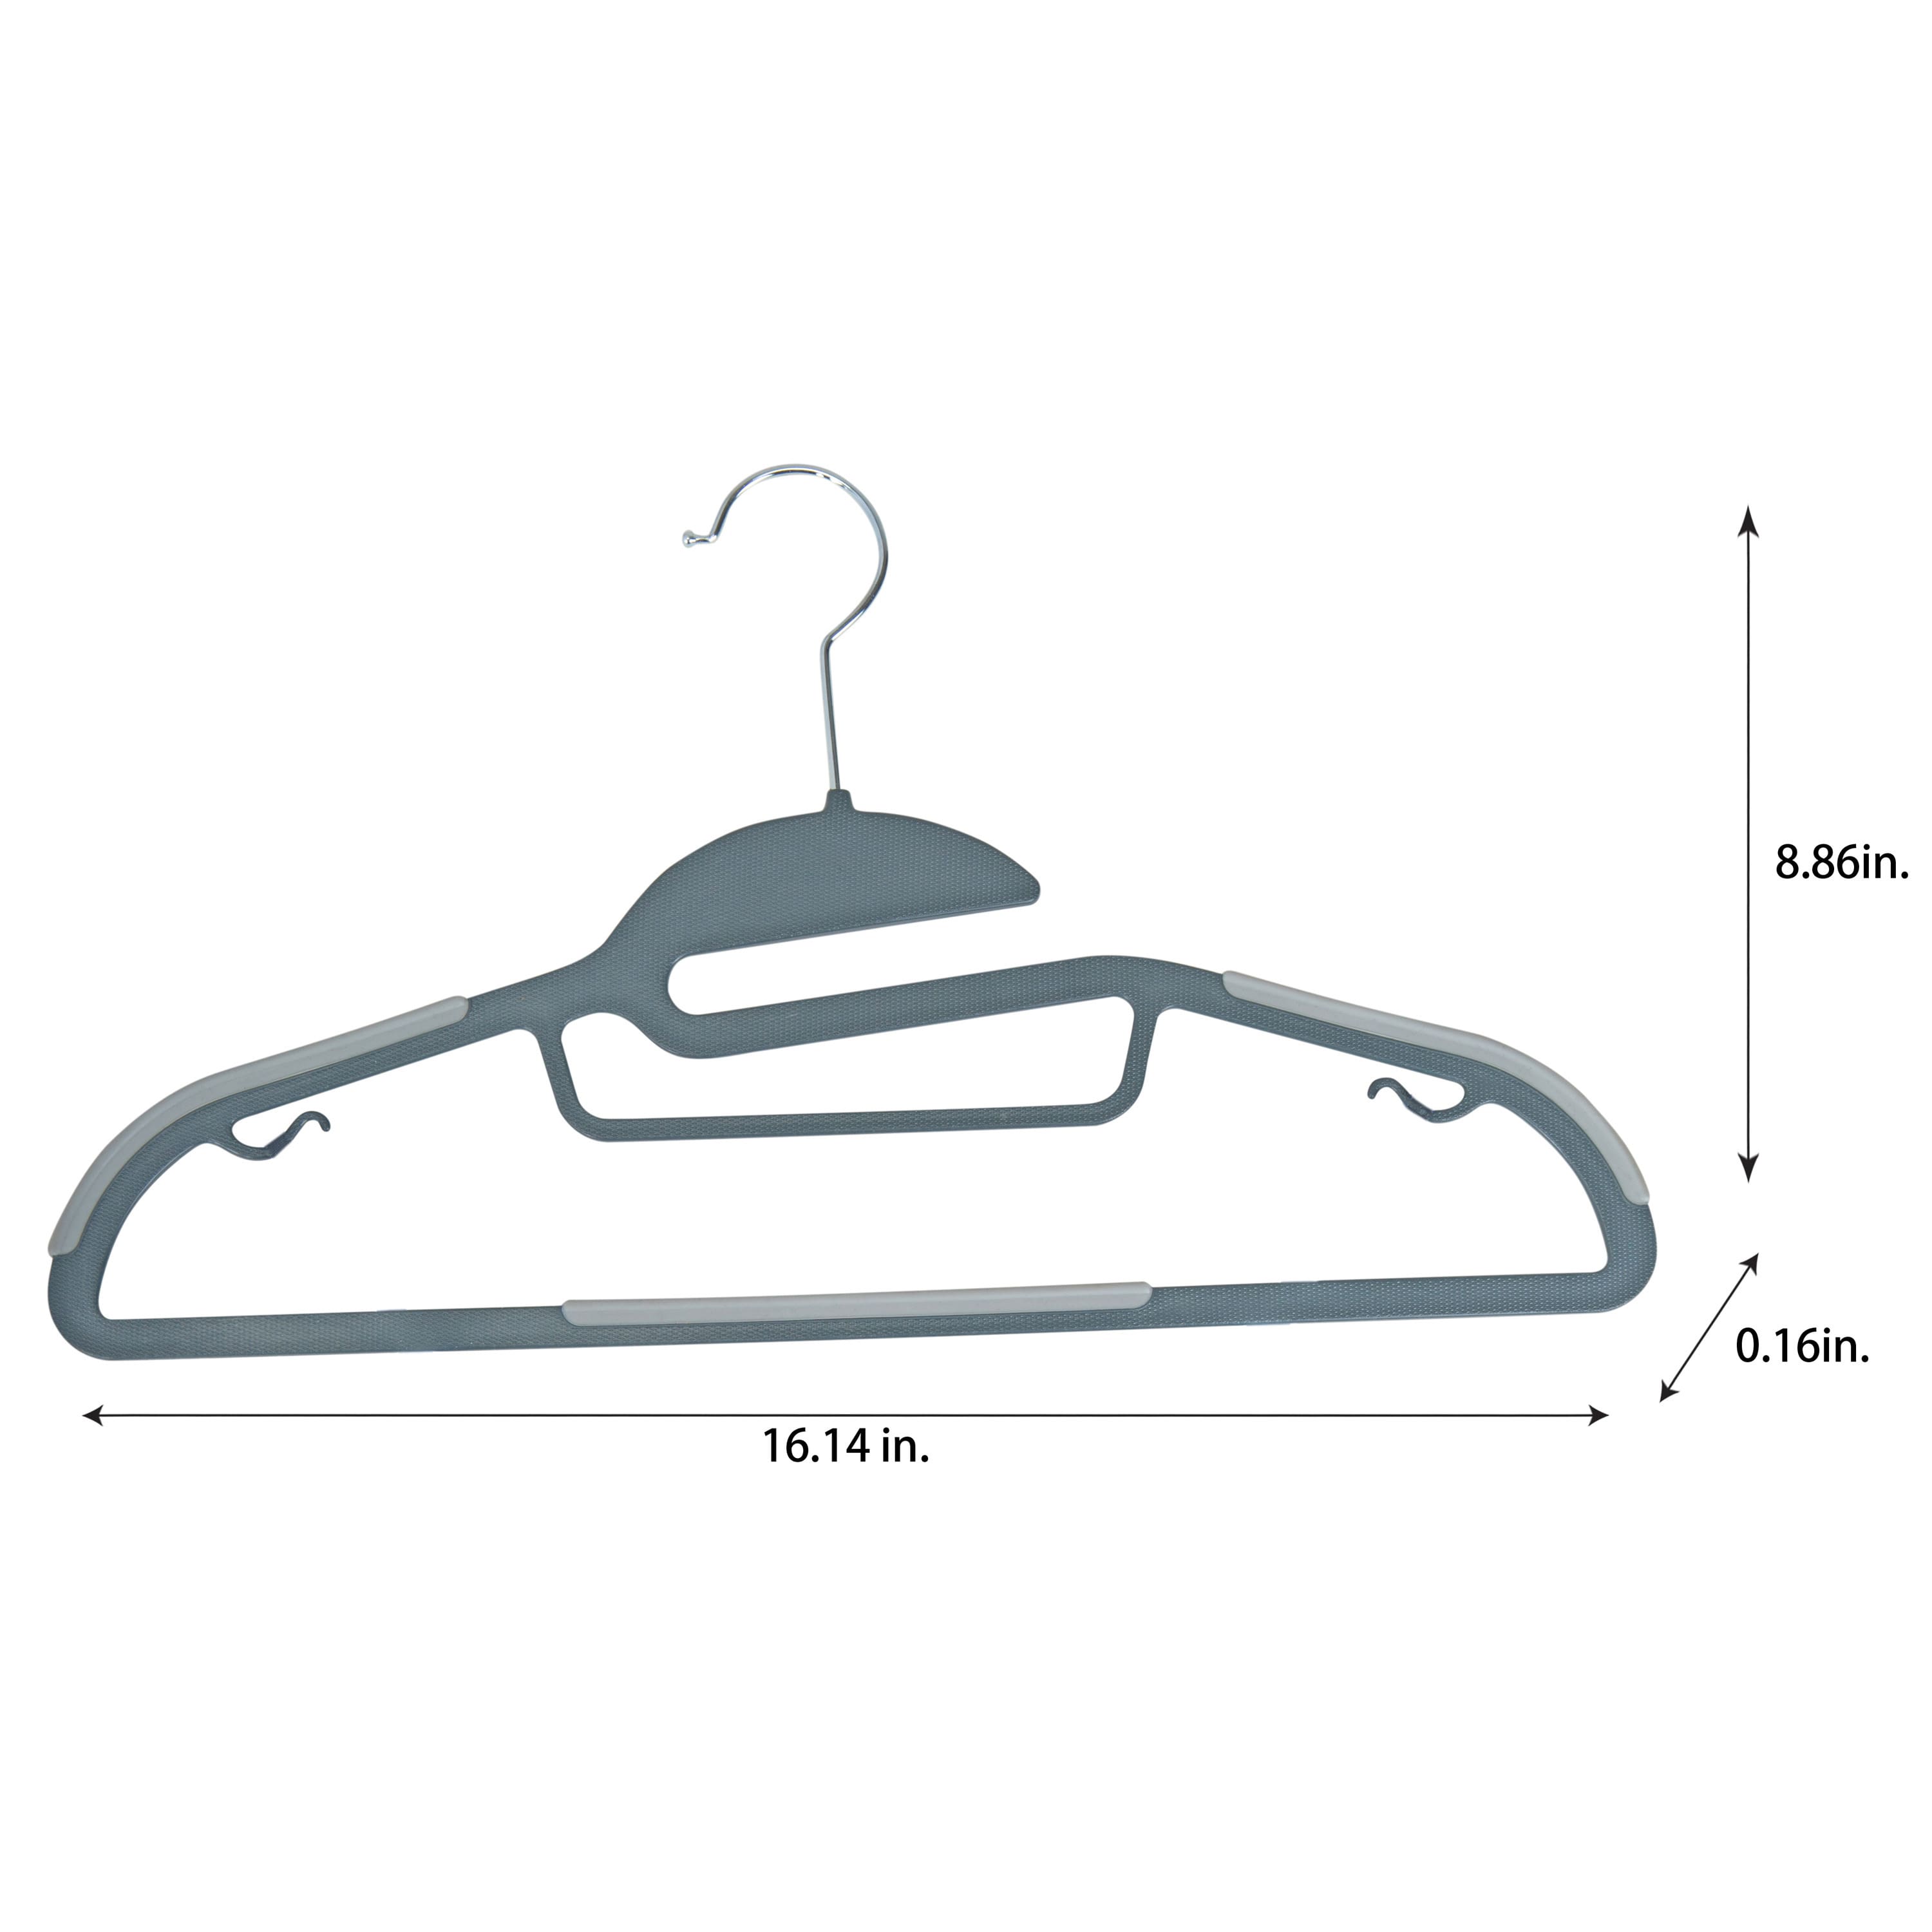 Simplify Ultimate Hangers, 8ct.